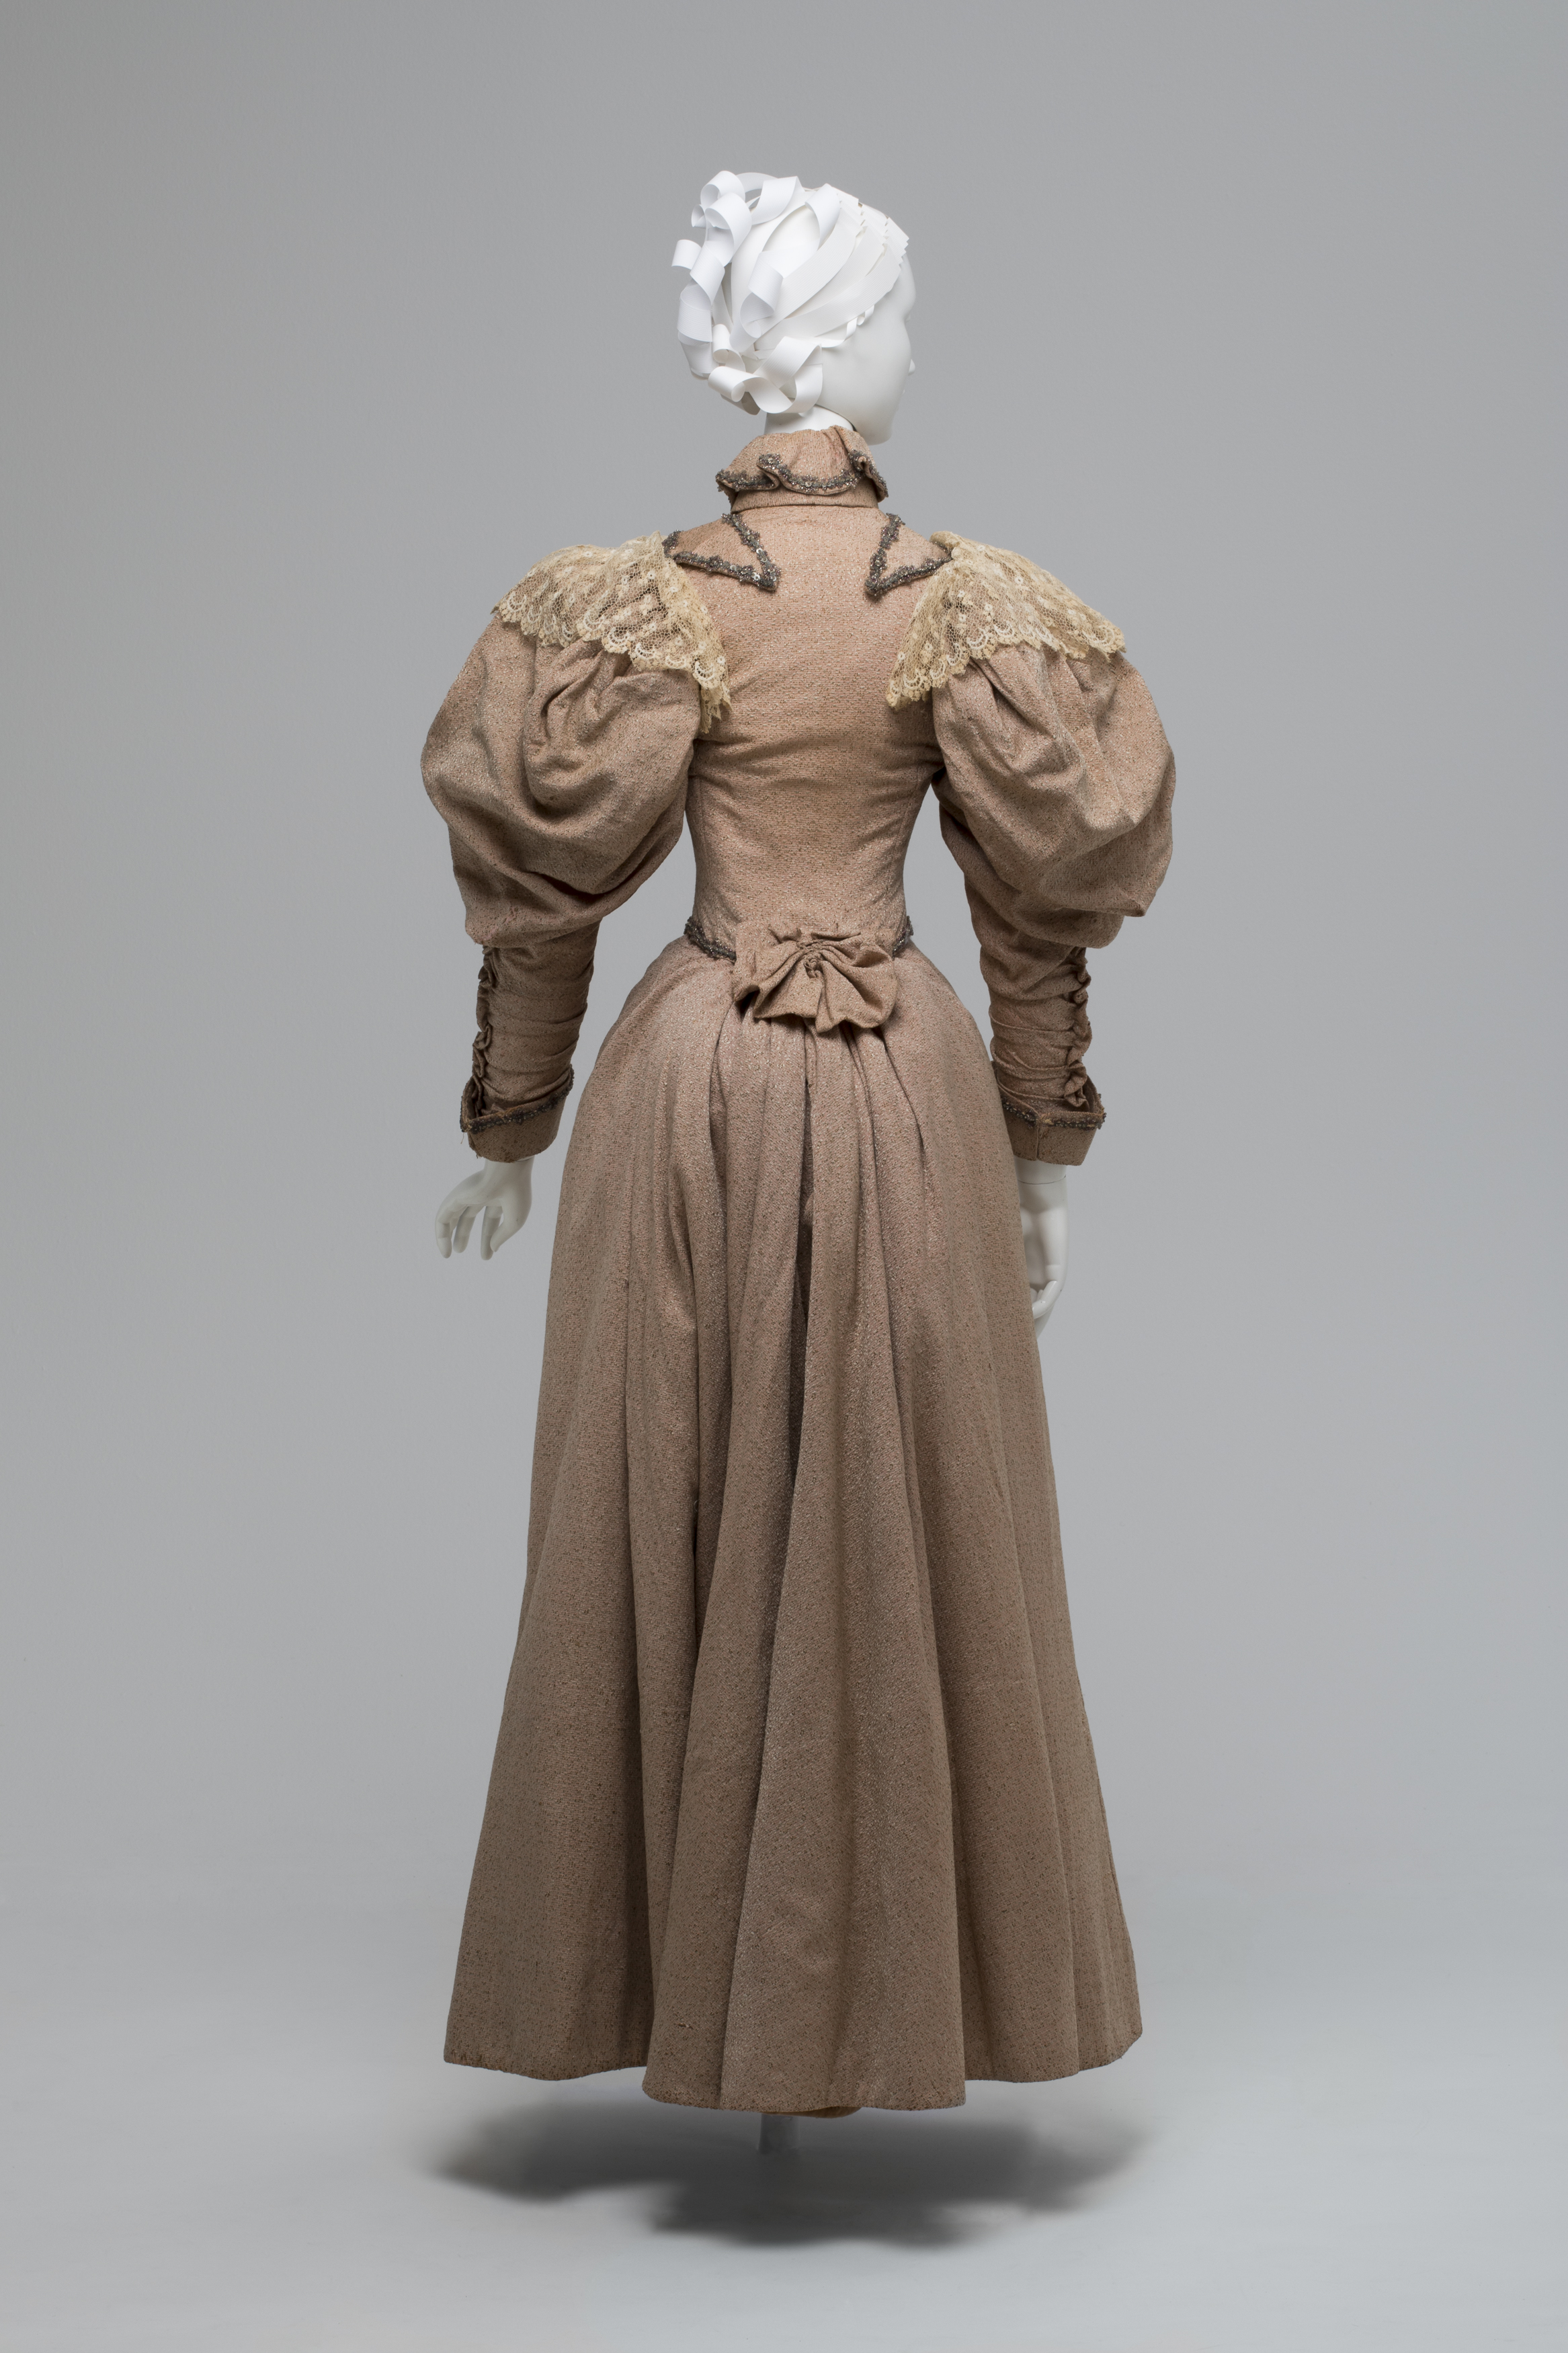 Dress worn by Elizabeth Cabrera (nee Shelley)